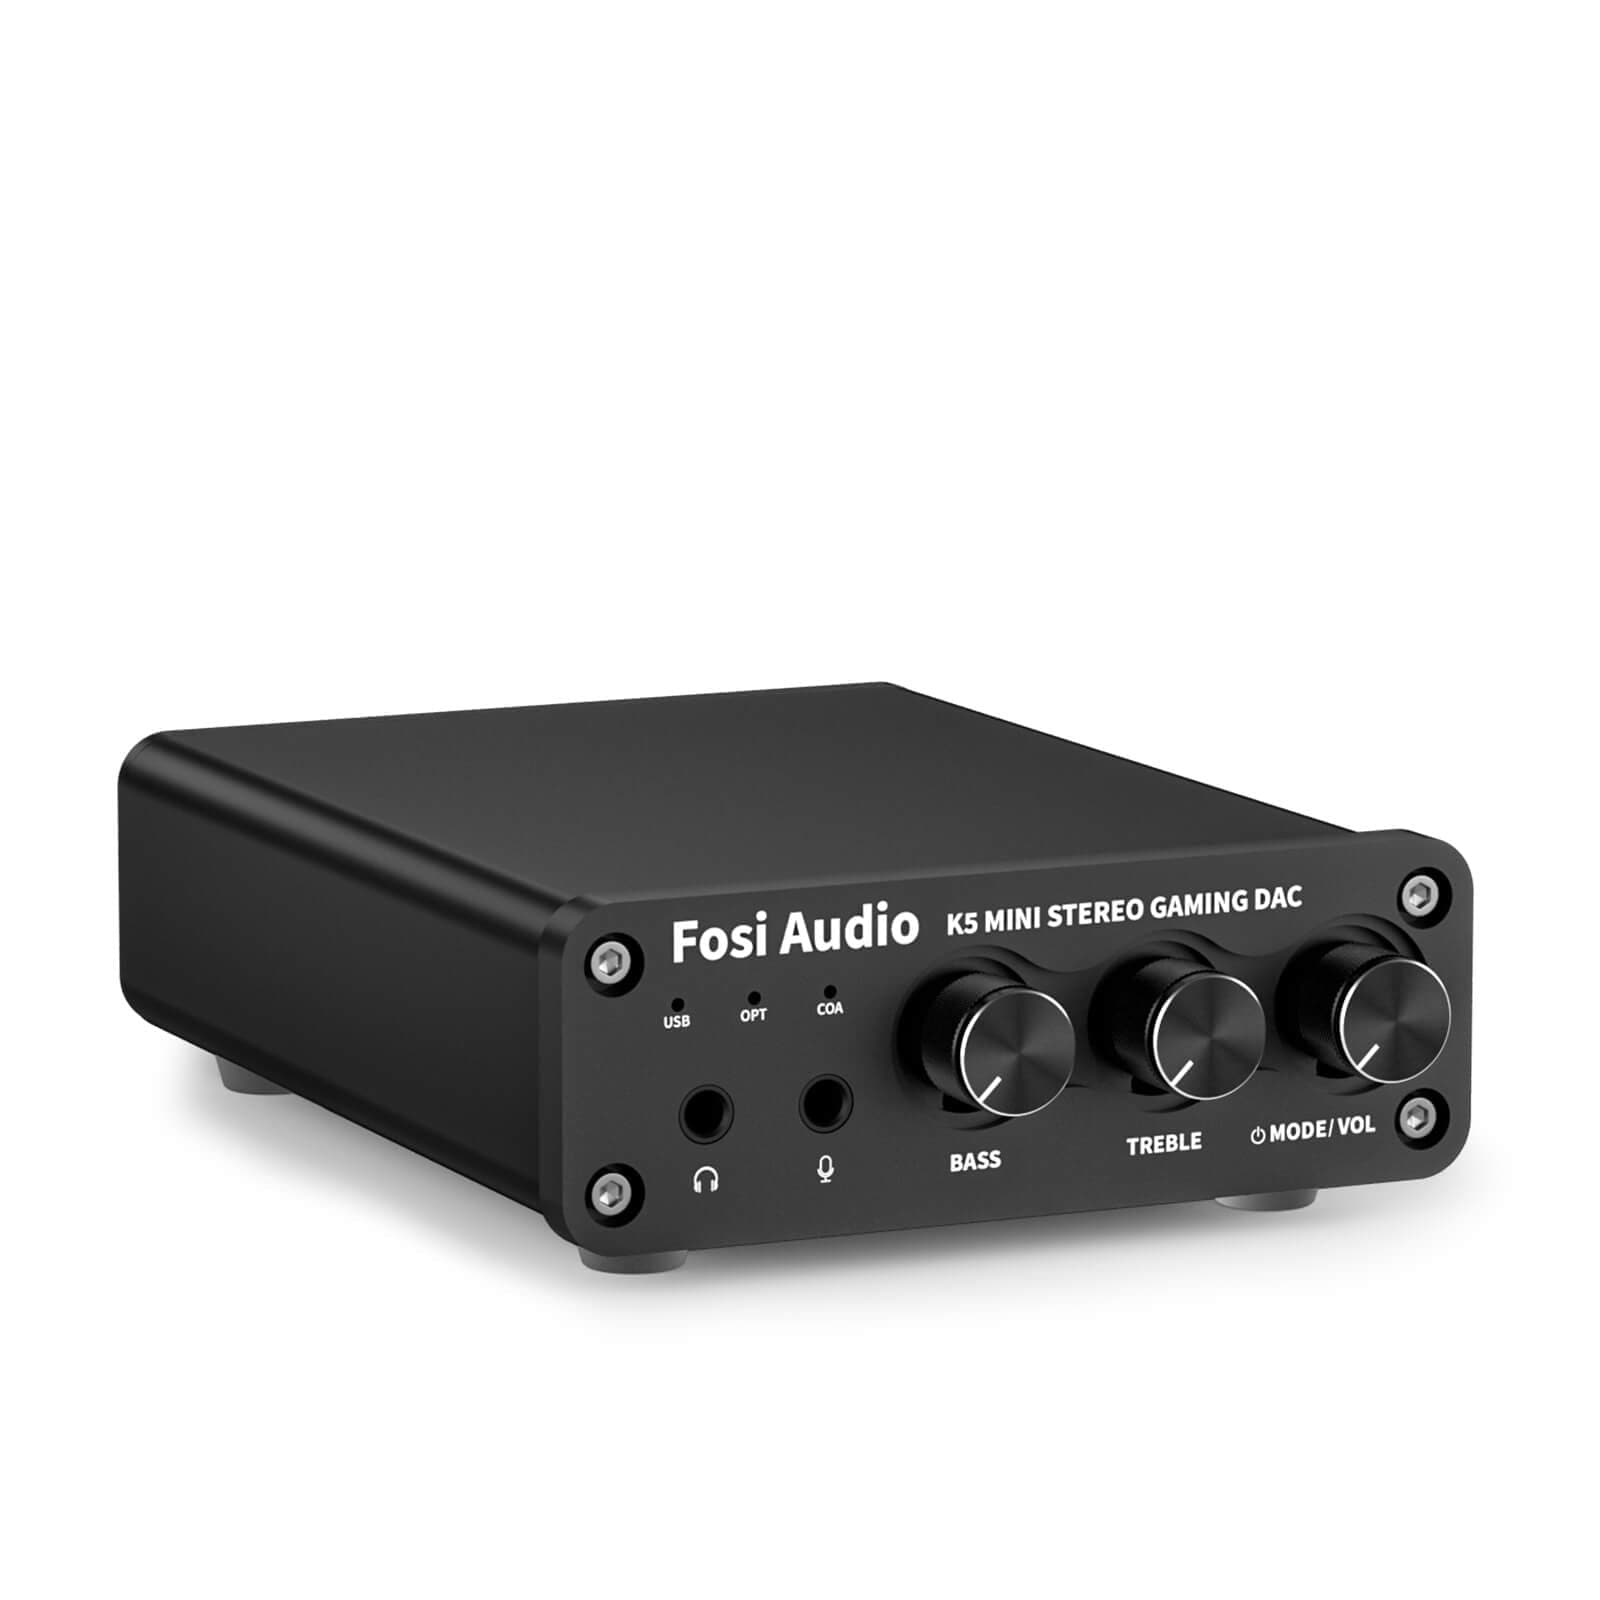 Fosi Audio K5 Mini Stereo Gaming DAC HiFi Headphone Amplifier Support Microphone